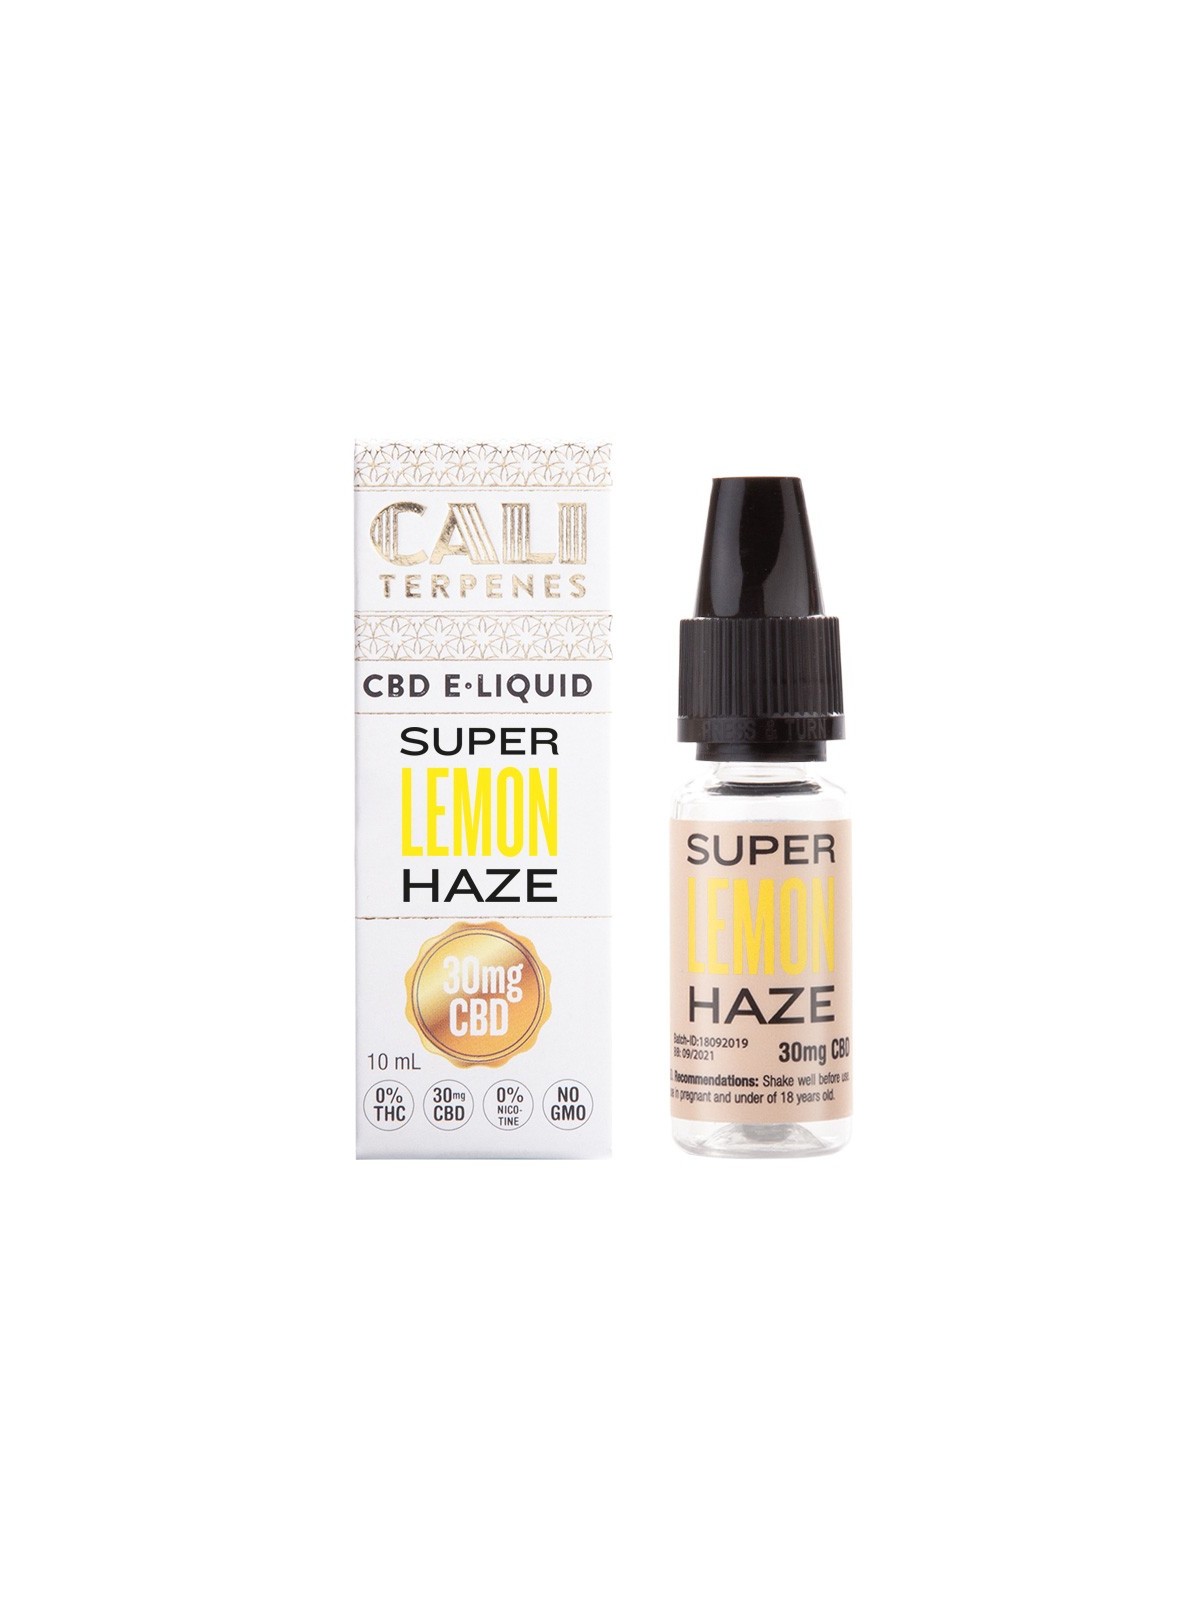 E-liquid CBD Super Lemon Haze - 30mg - Cali Terpenes